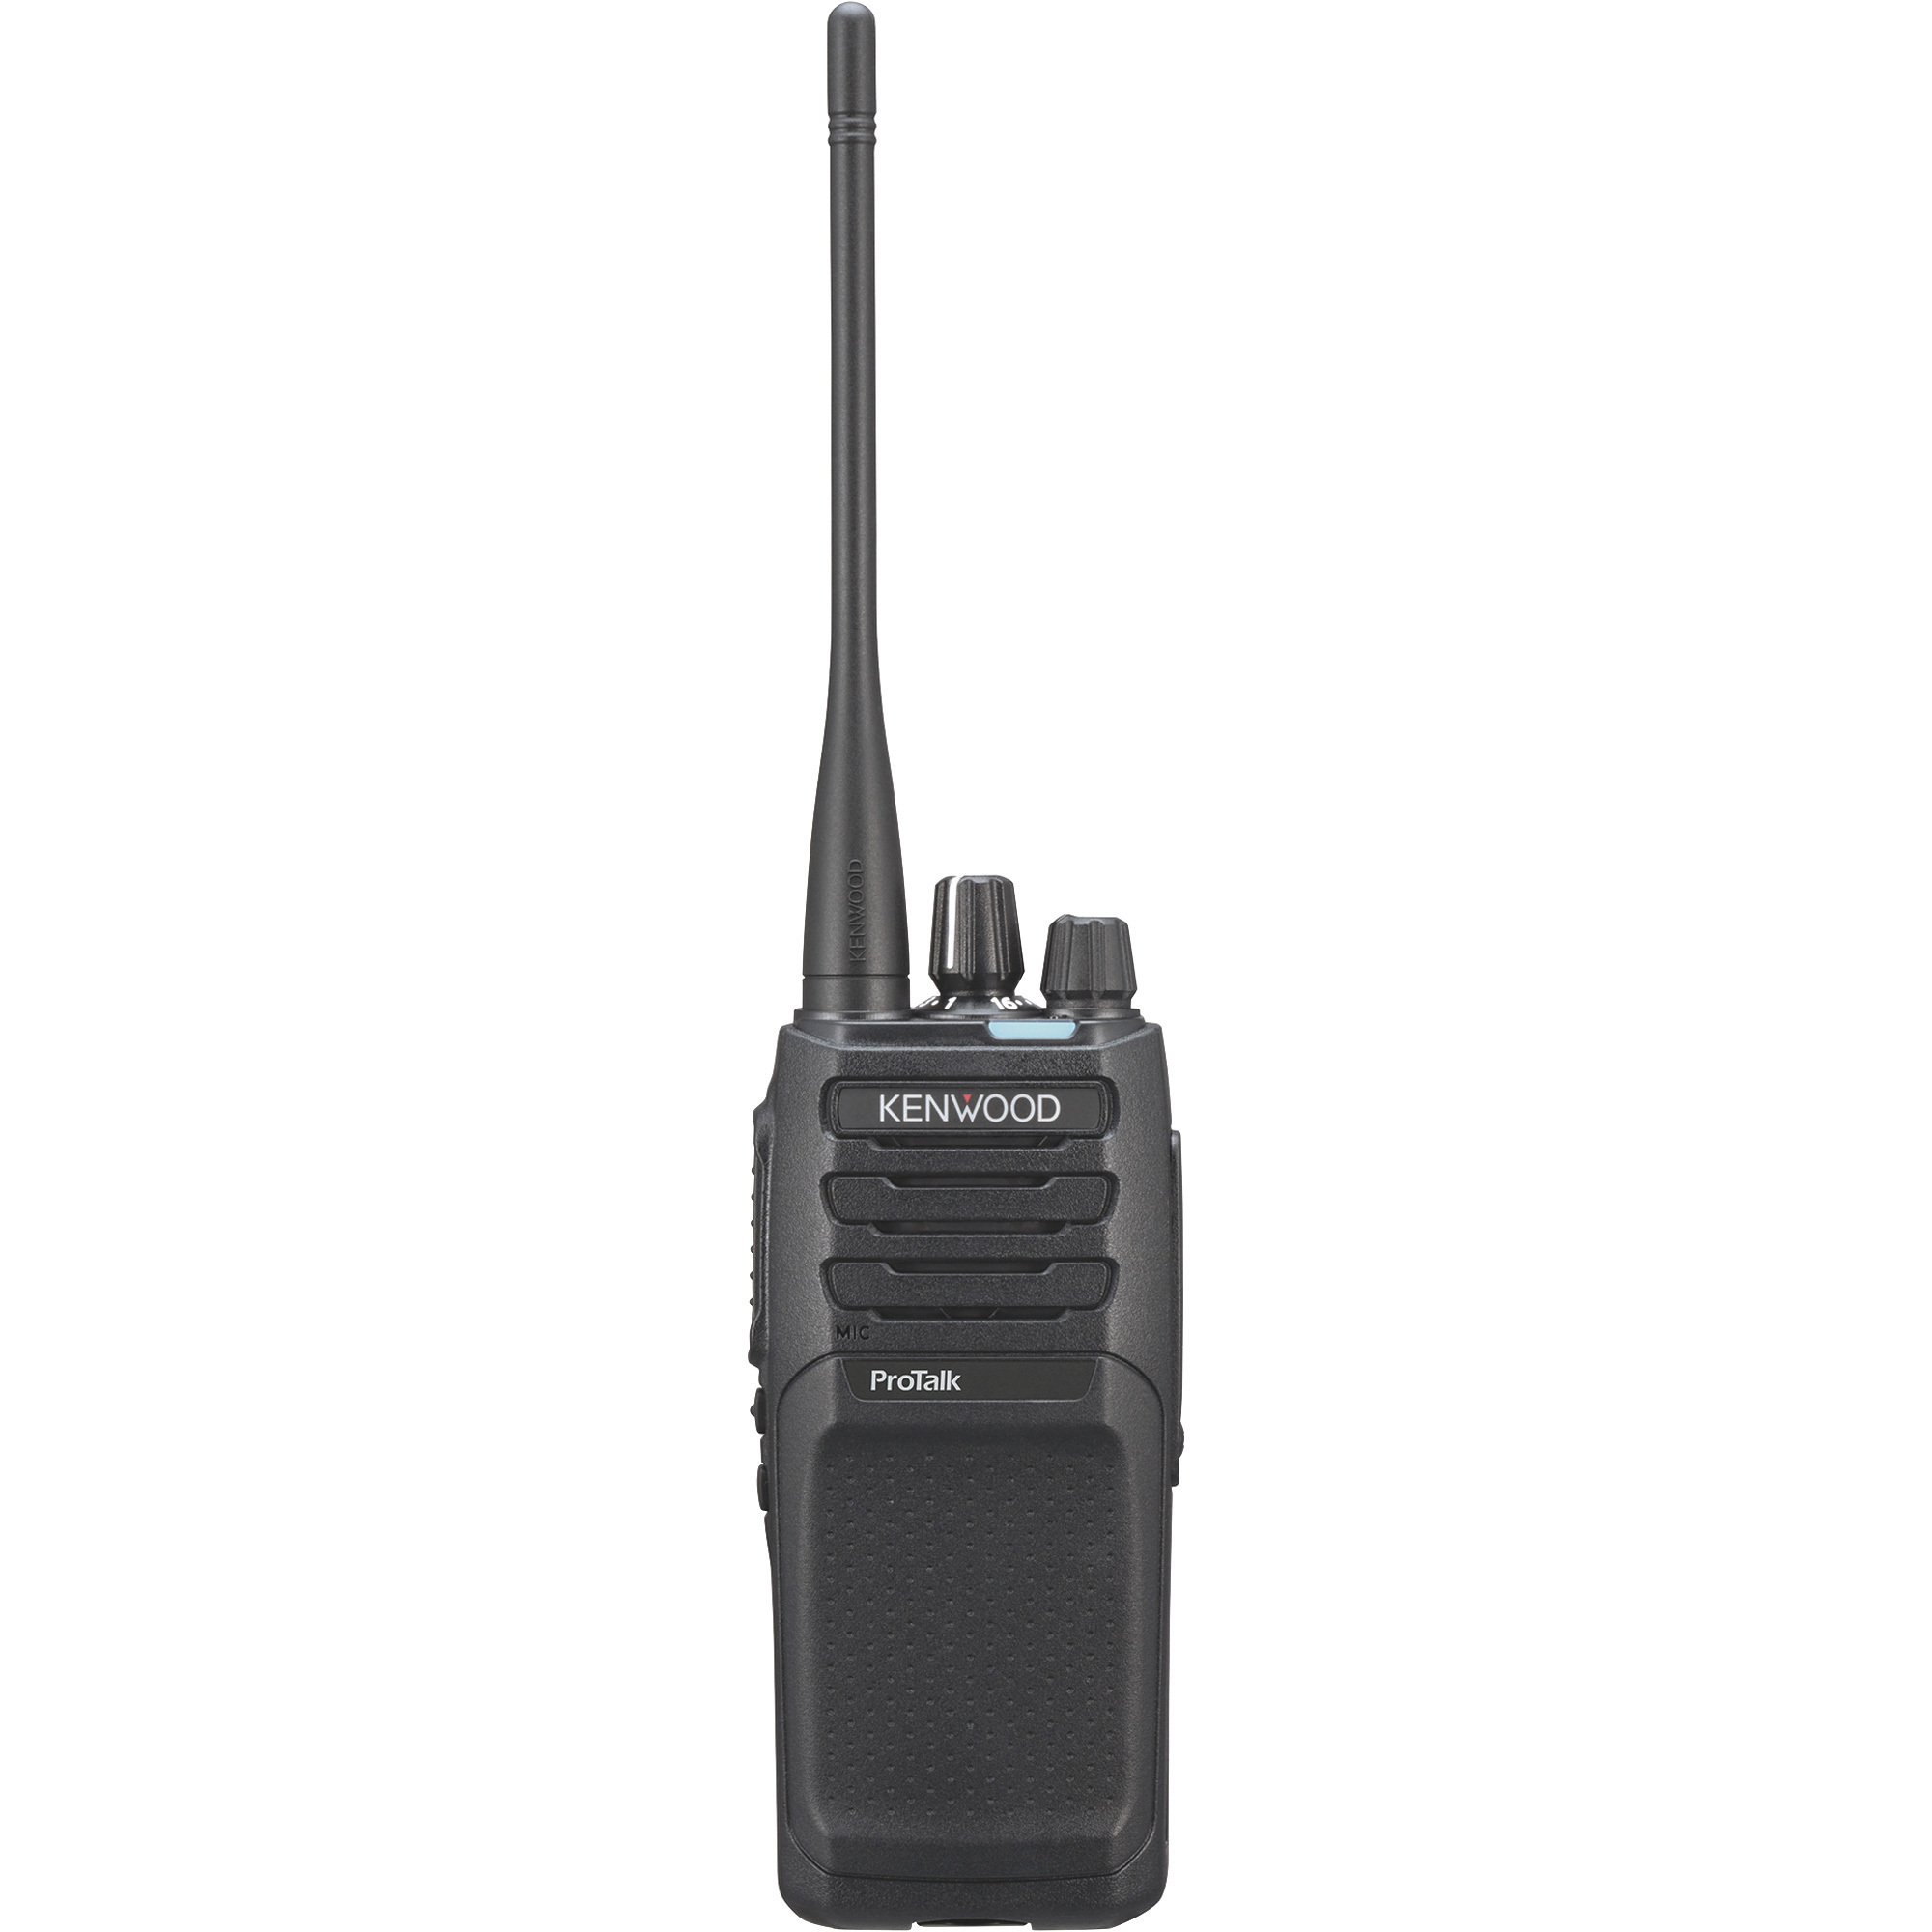 Kenwood ProTalk UHF Handheld Radio â 2 Watts, 6-Mile Range, Model NX-P1302AUK